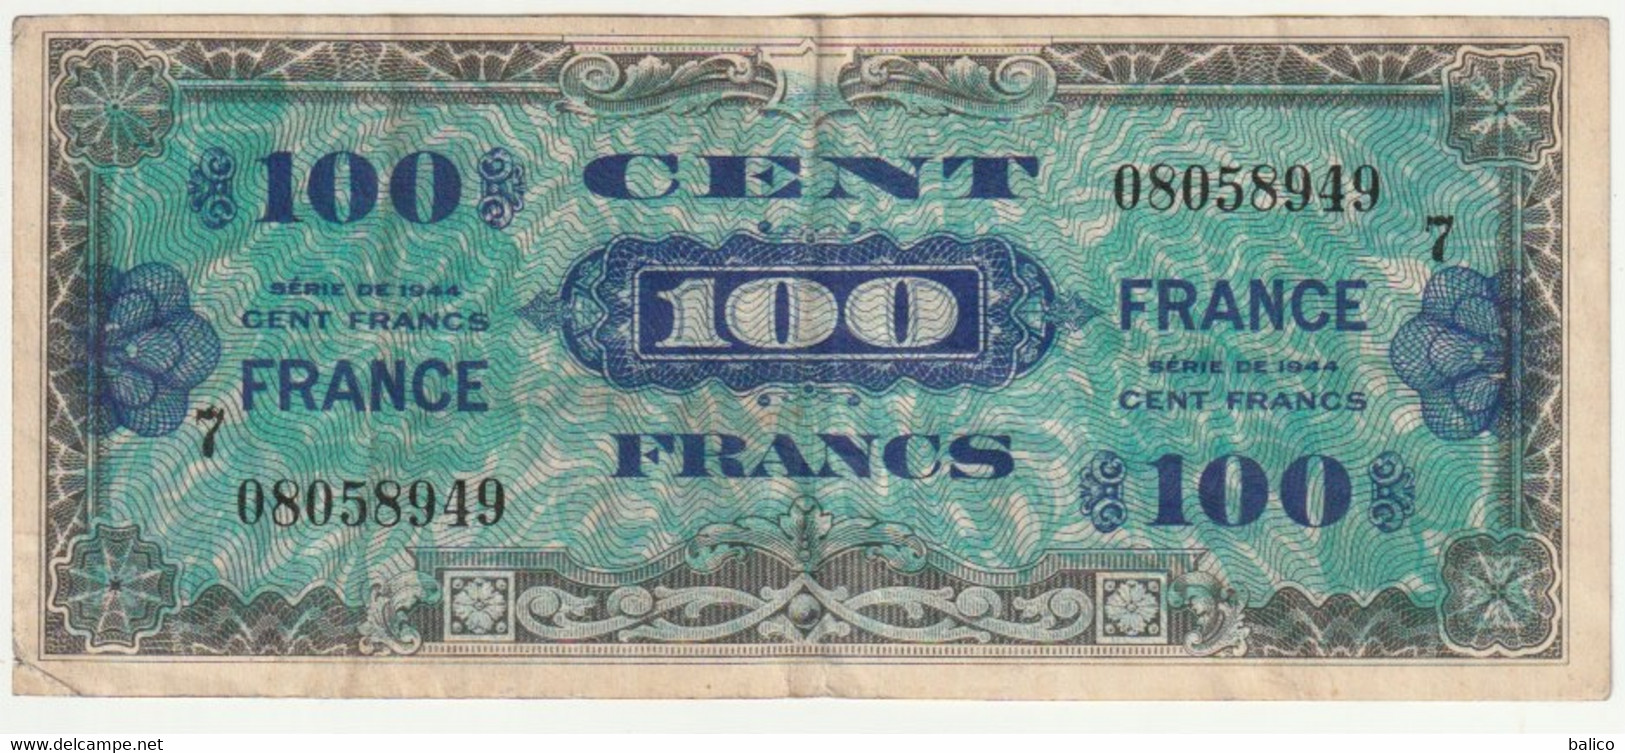 France, 100 Francs   1944   N° 08058949 - 1944 Drapeau/France